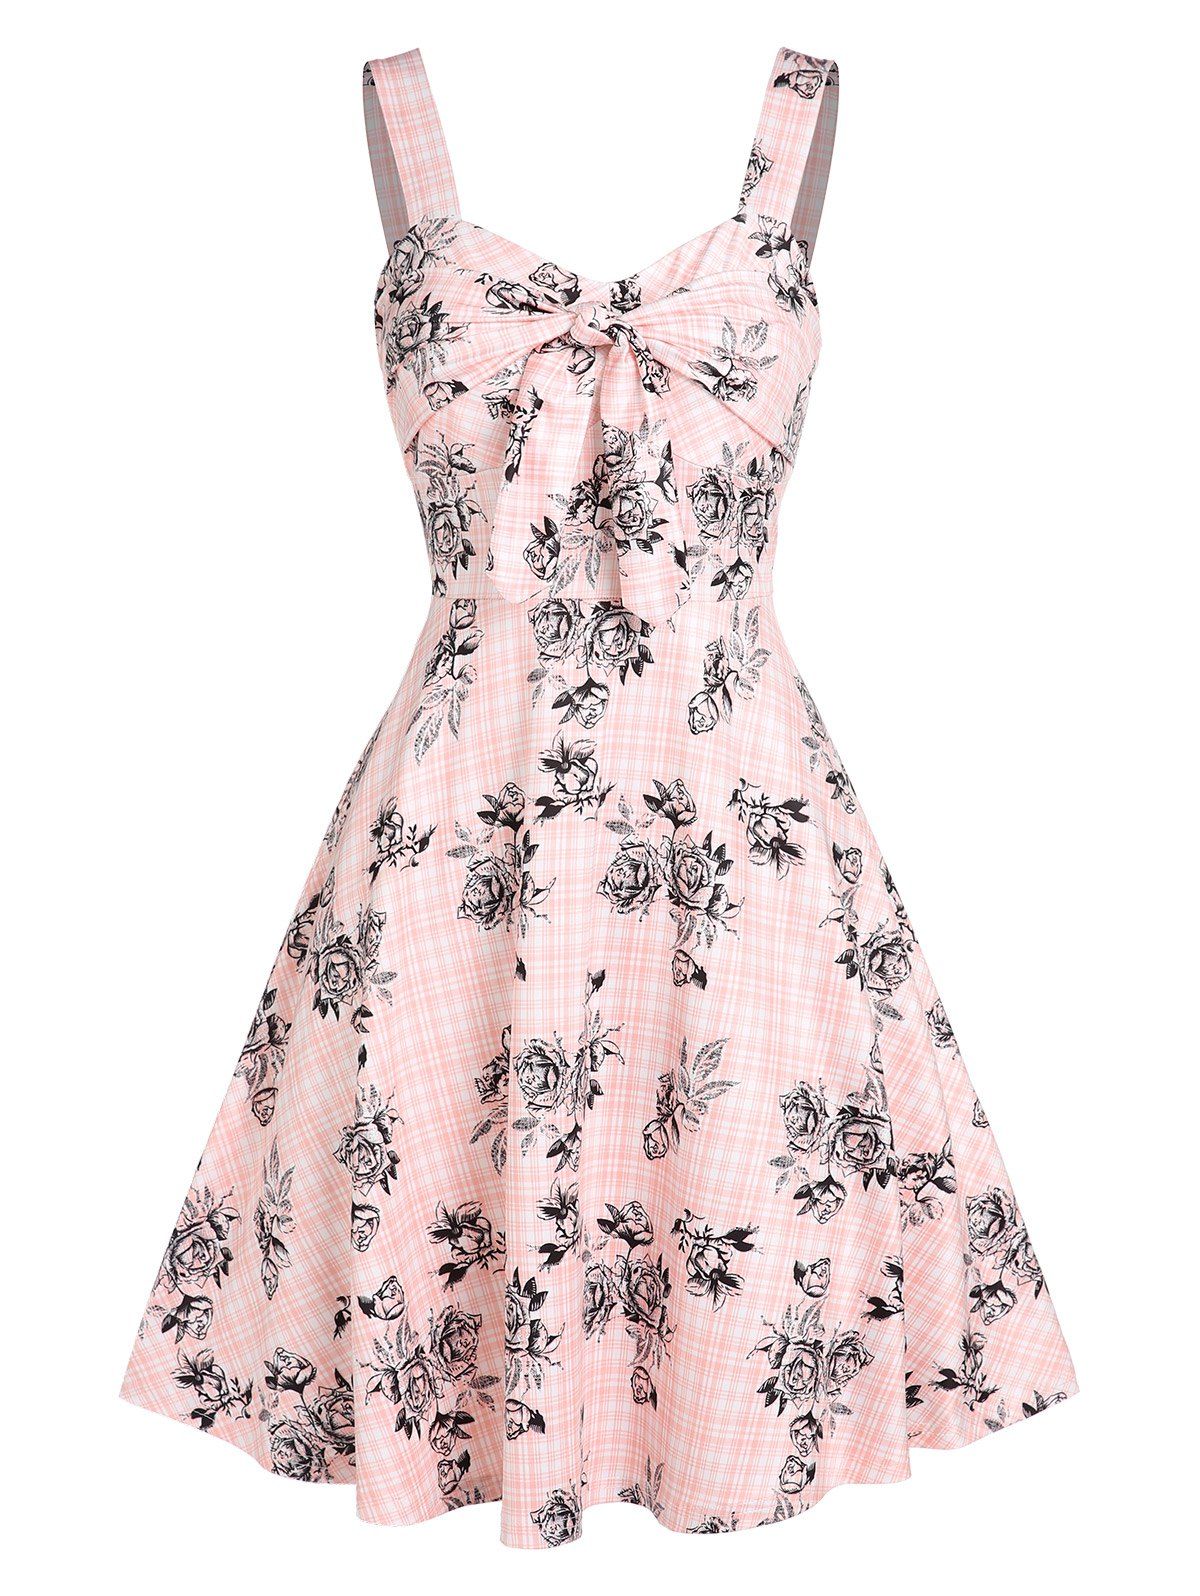 Vacation Sundress Rose Plaid Print Tie Knot Strap Summer A Line Dress - LIGHT PINK XL